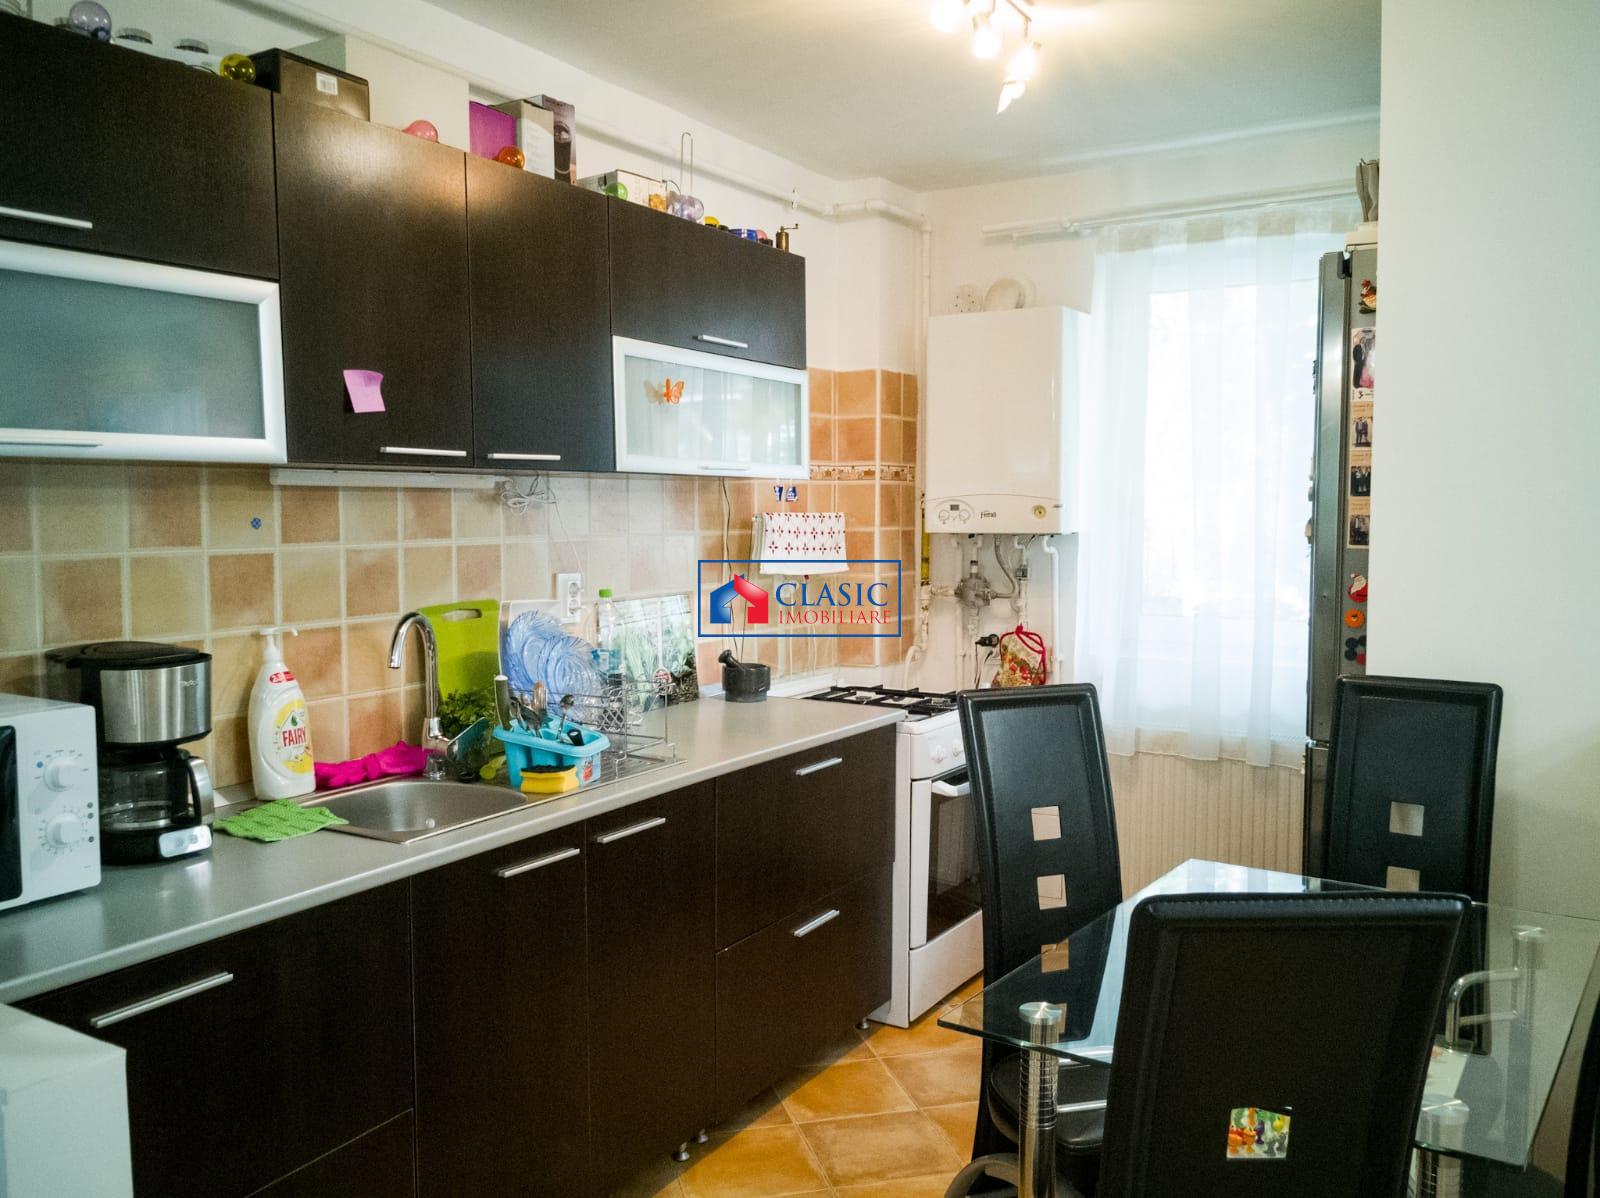 Vanzare apartament 3 camere in bloc nou zona Manastur str Bucovina